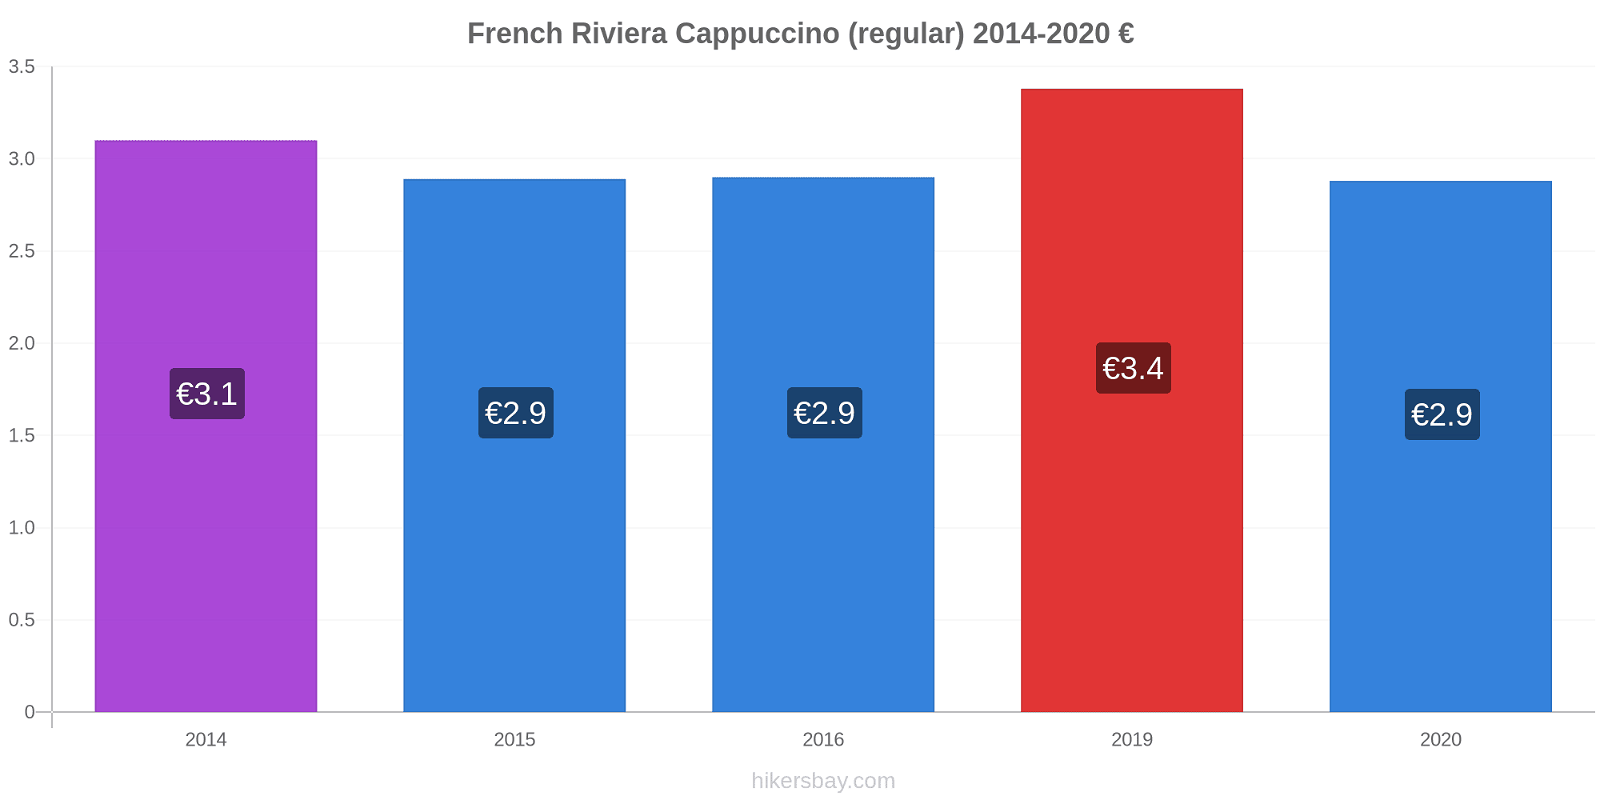 French Riviera price changes Cappuccino (regular) hikersbay.com